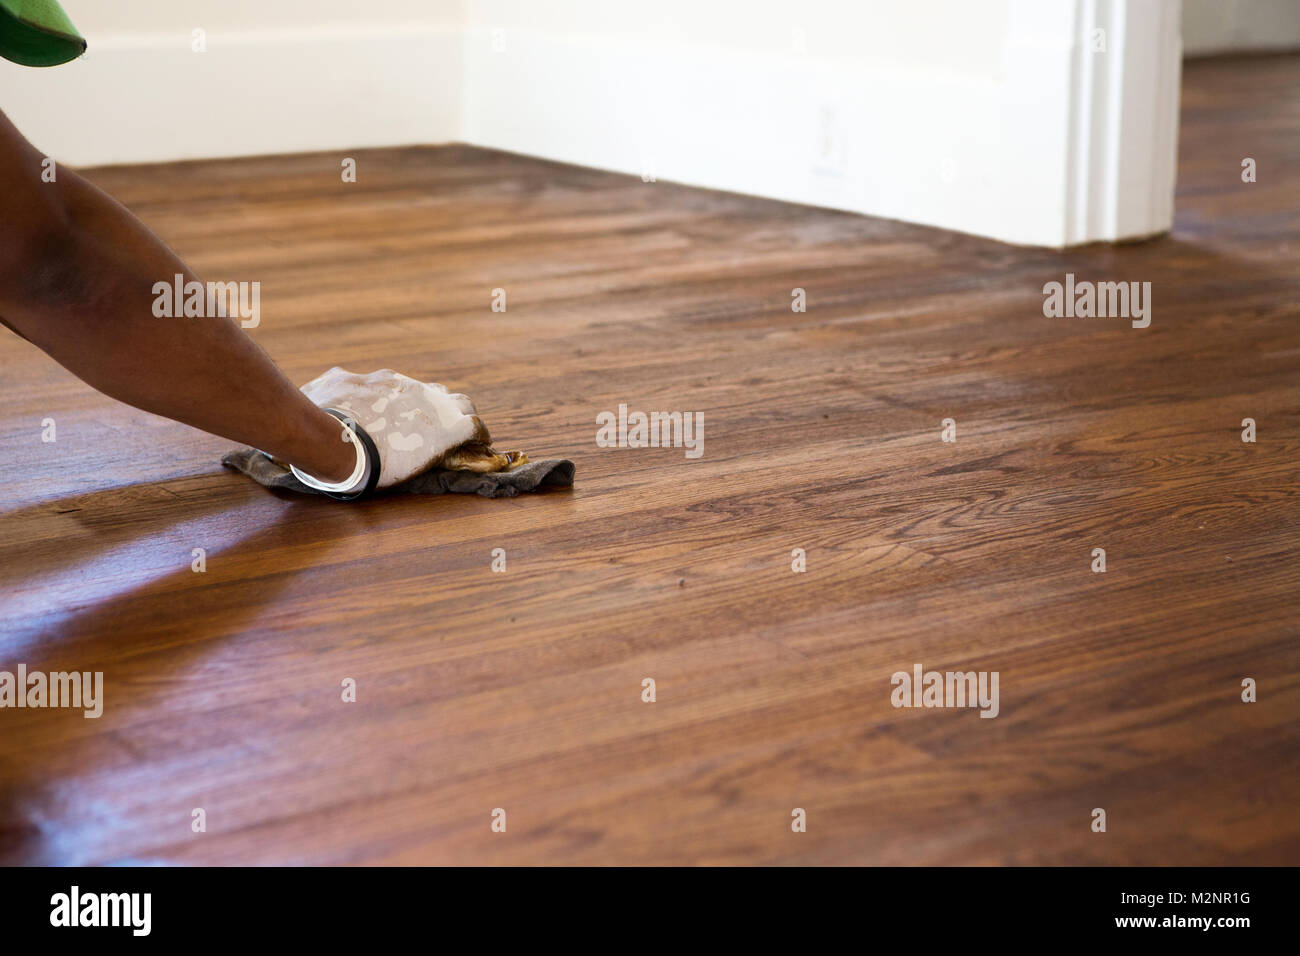 Refinish wood floors Stock Photo